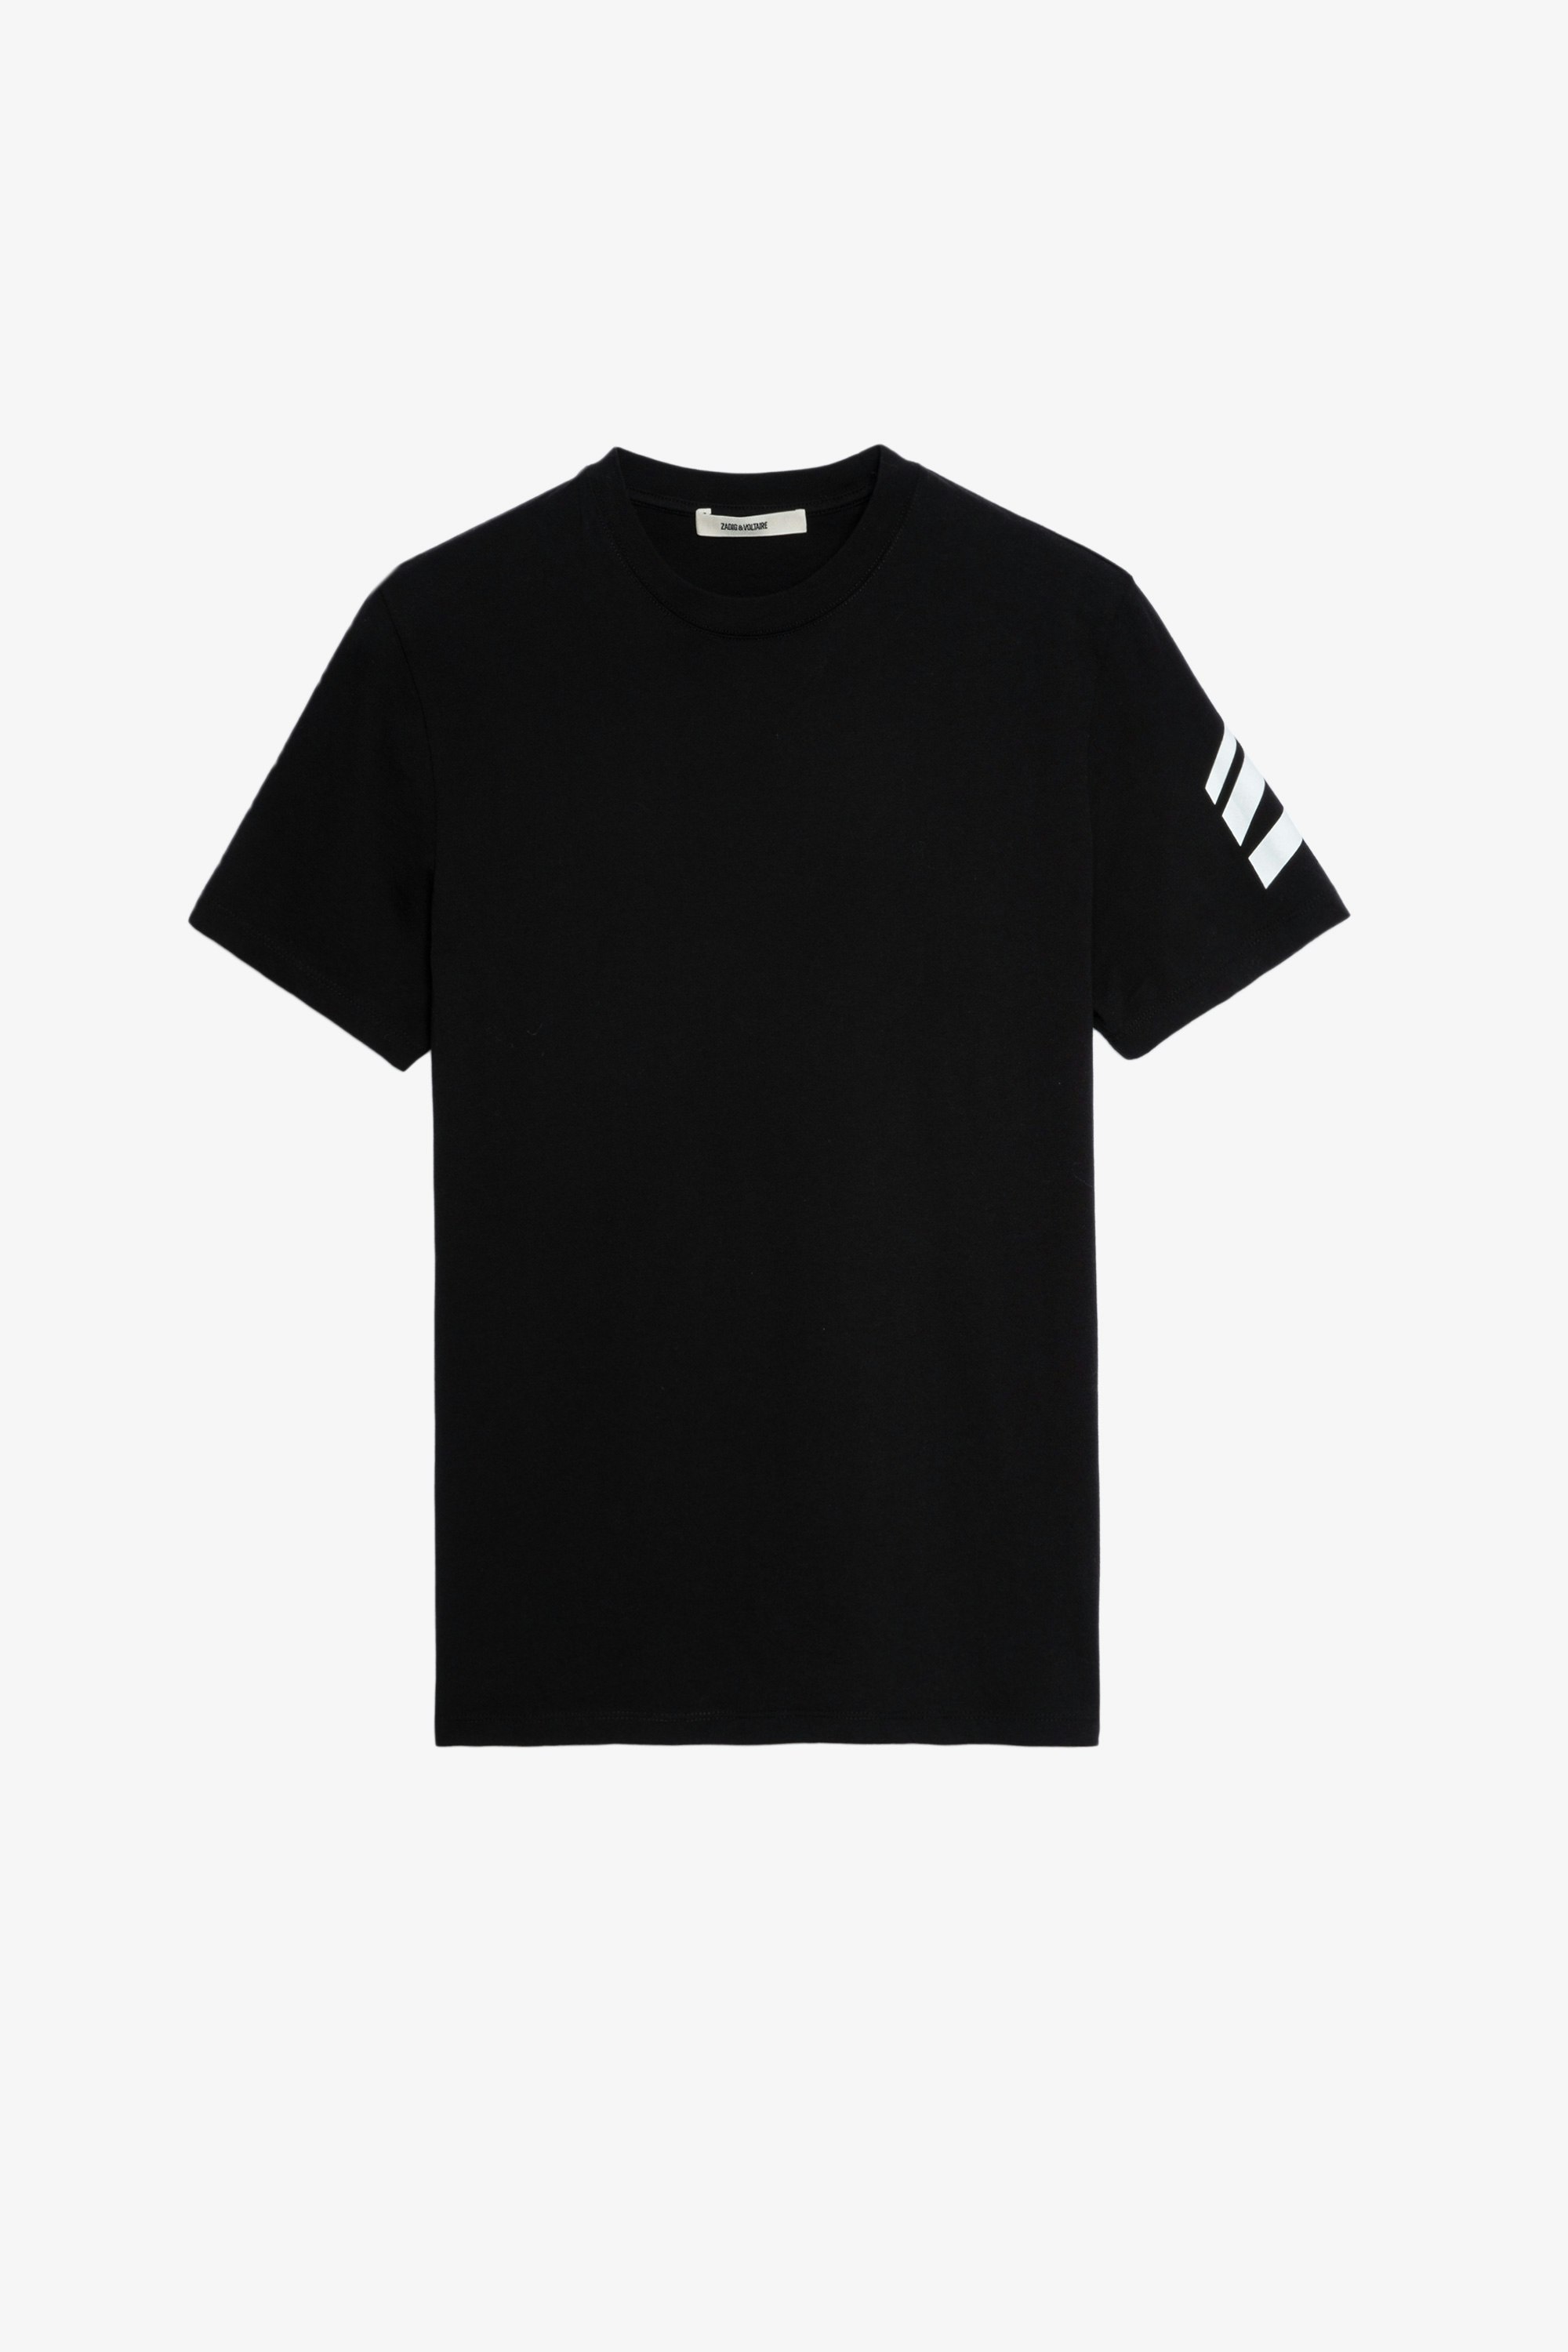 Camiseta Tommy HC Arrow Camiseta negra de algodón con flecha en la manga izquierda Hombres